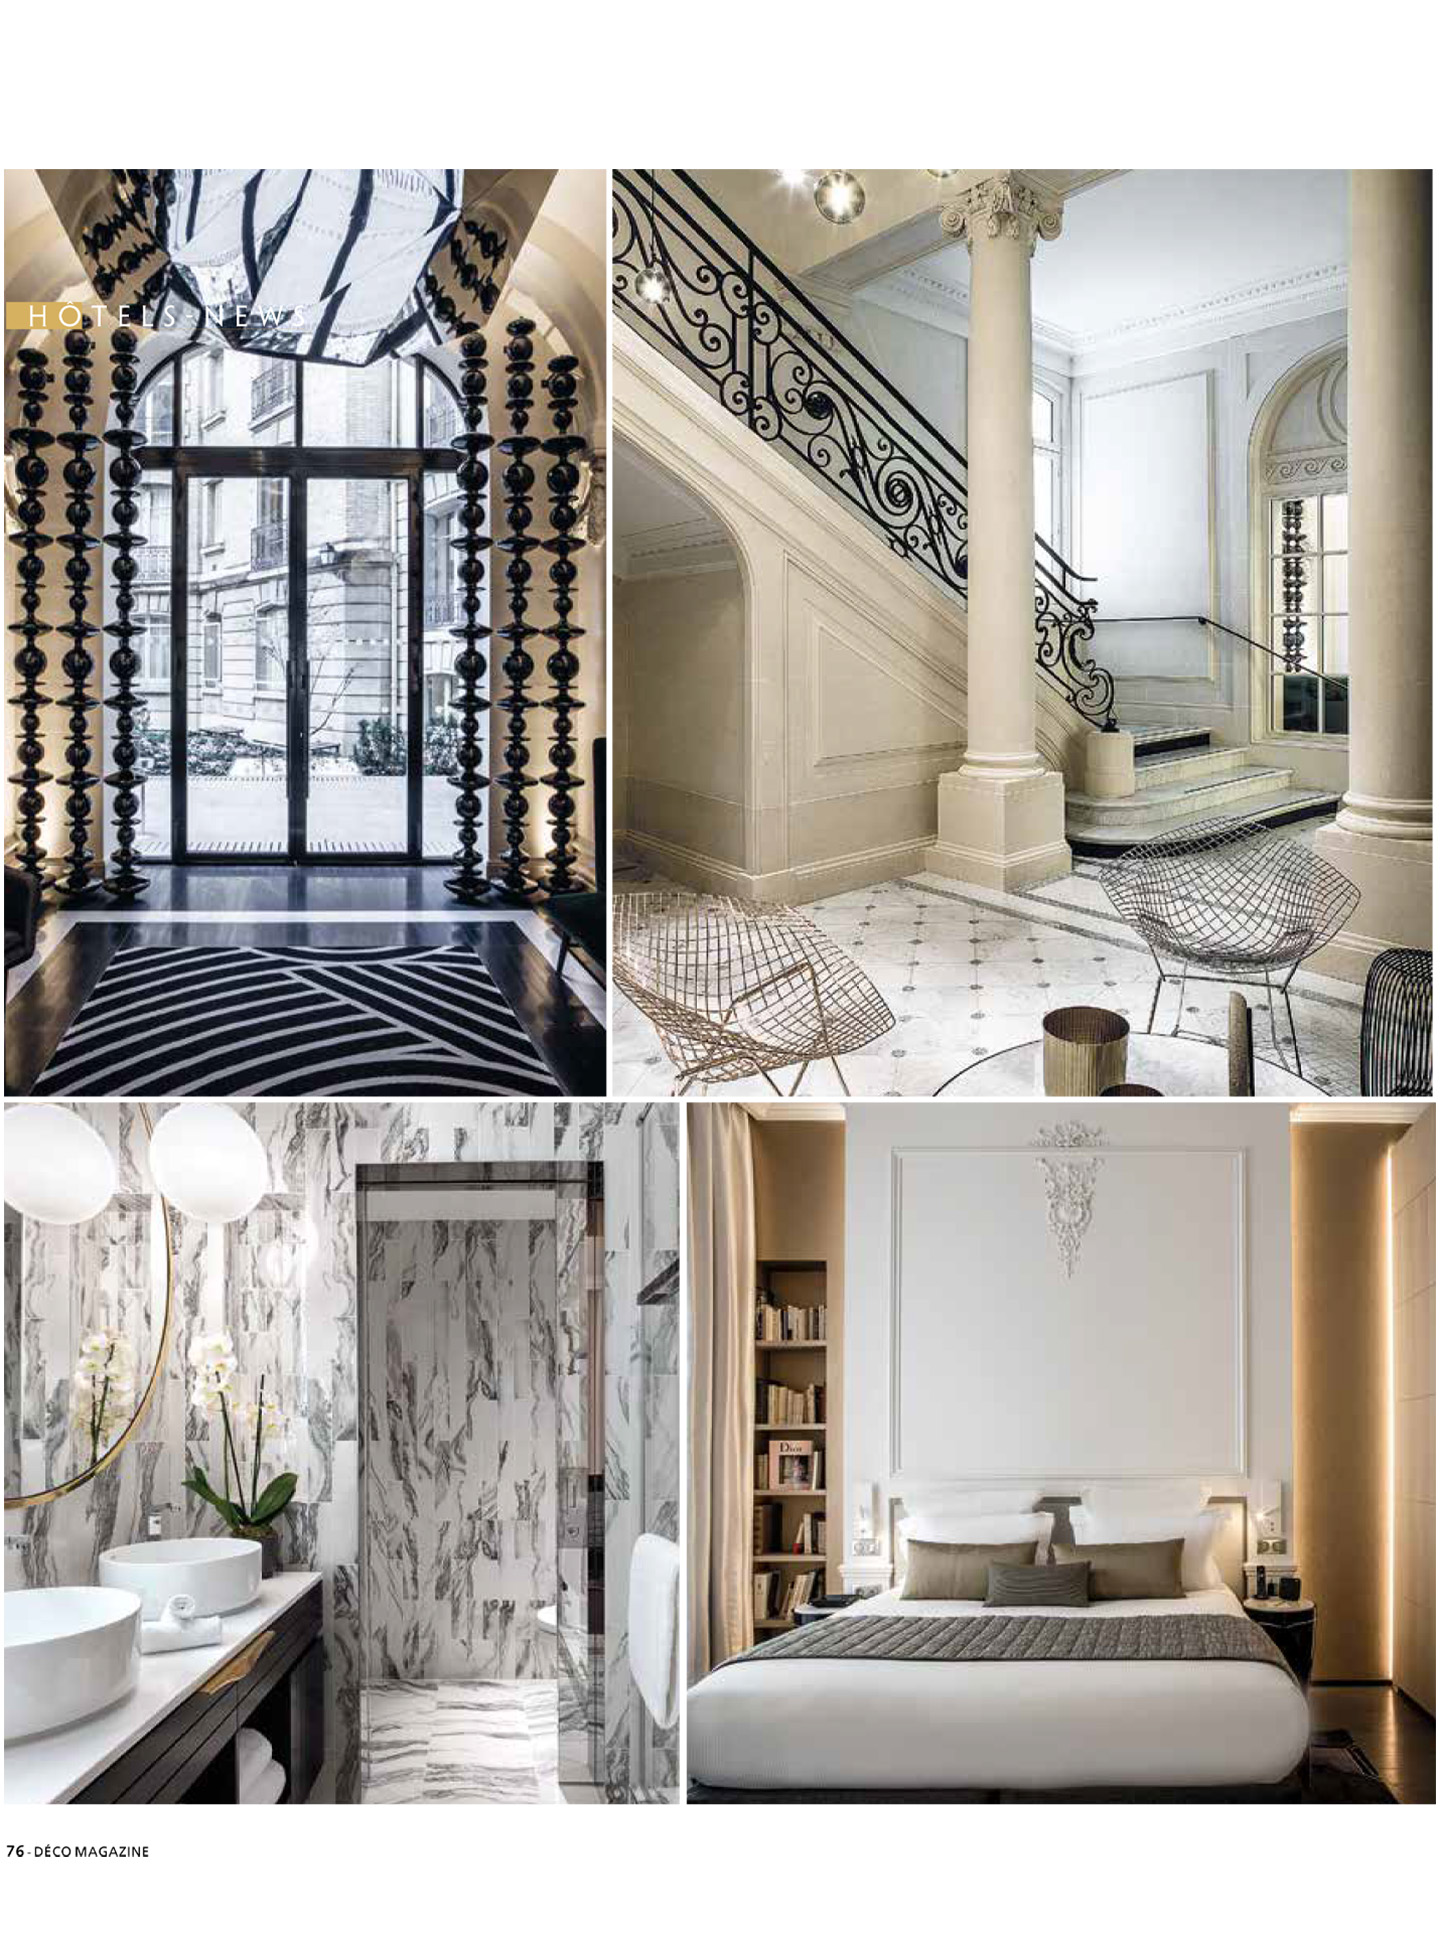 Article on La Clef Champs-Elysées Paris realized by the studio jean-Philippe Nuel in the magazine déco Magzine, new luxury hotel, luxury interior design, Parisian hotel